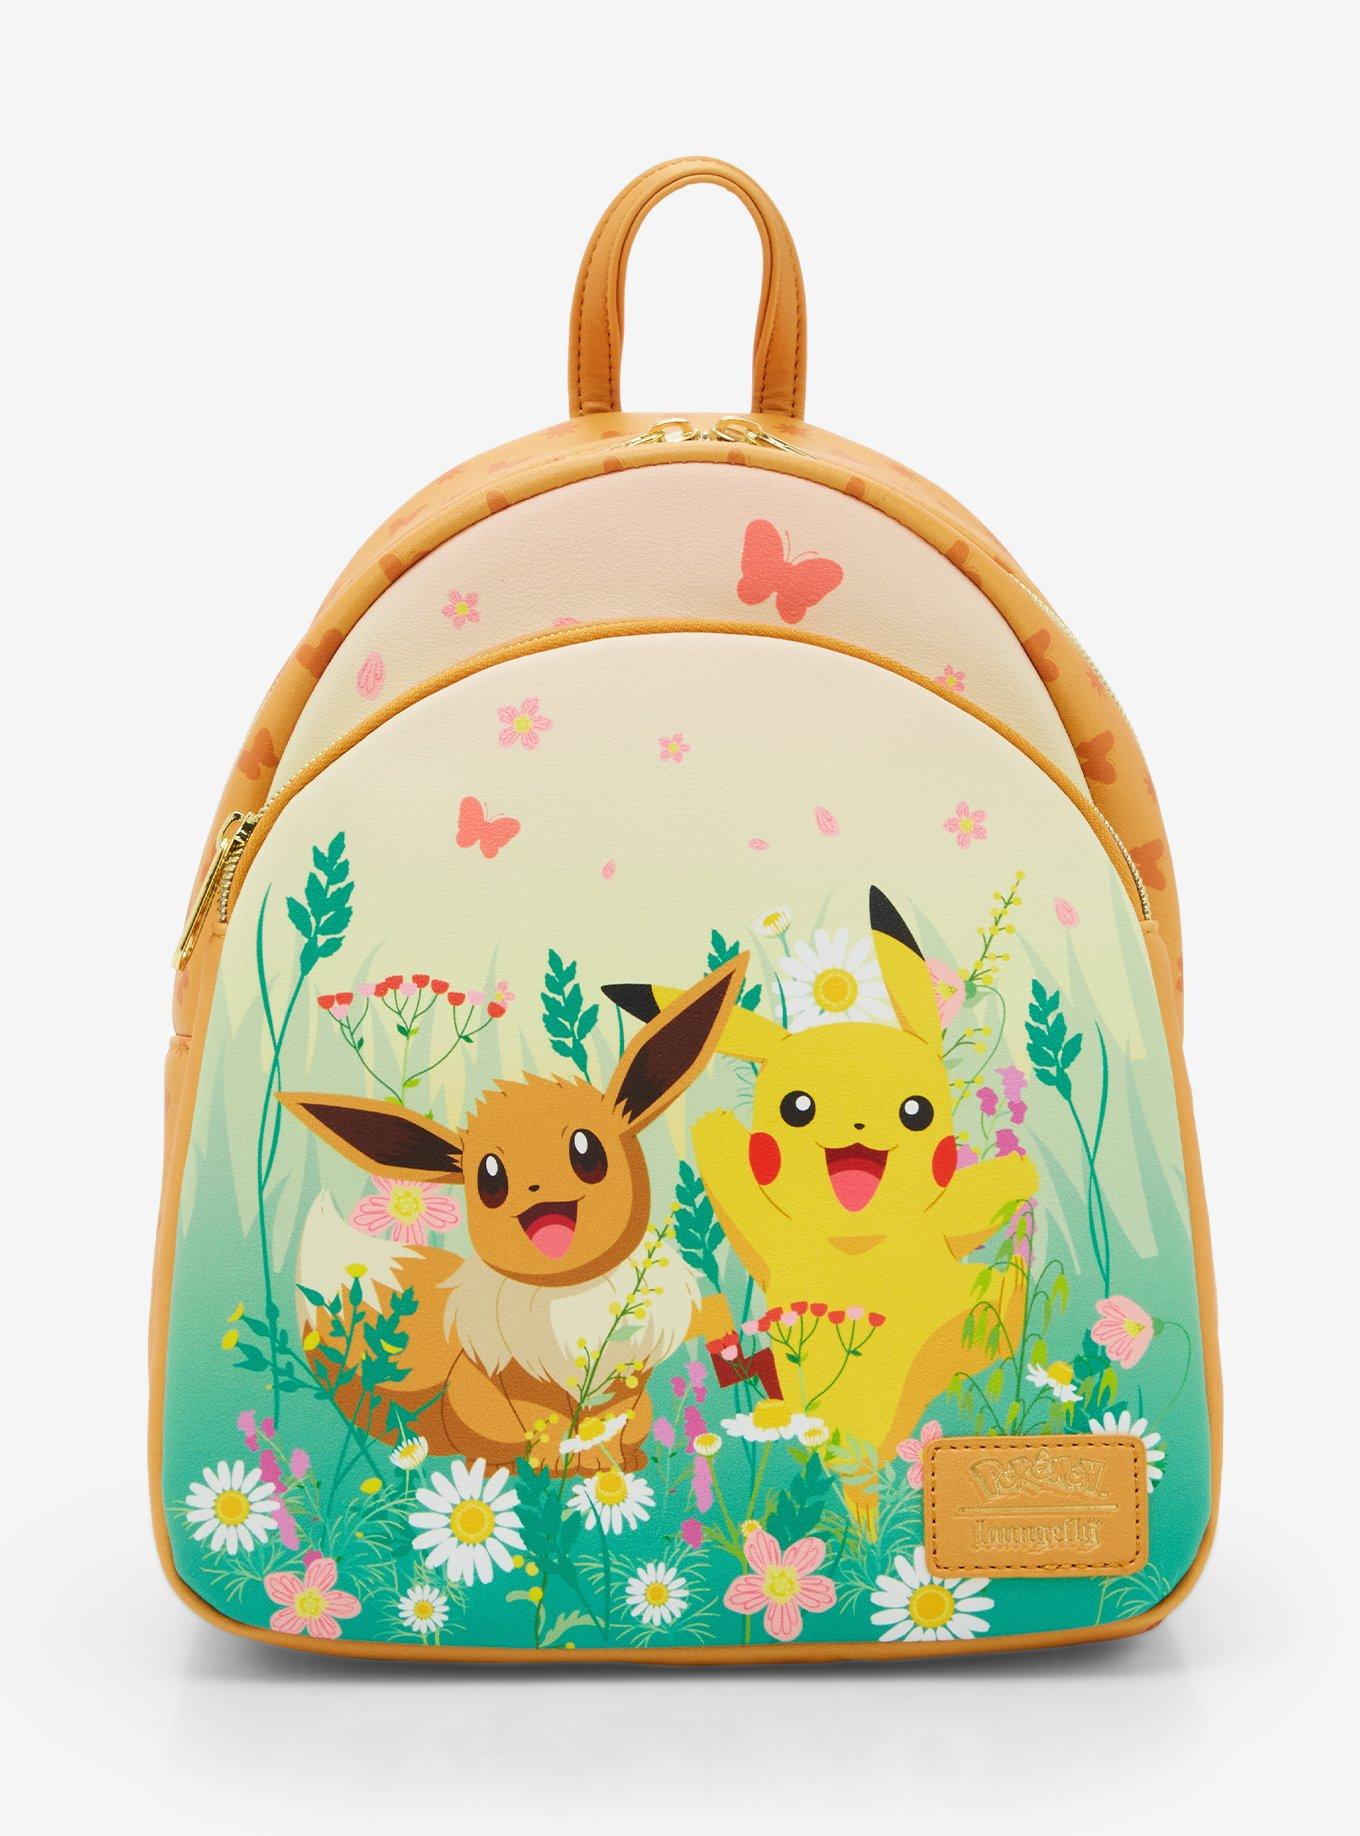 Loungefly Pokemon Fairy-Type Mini Backpack